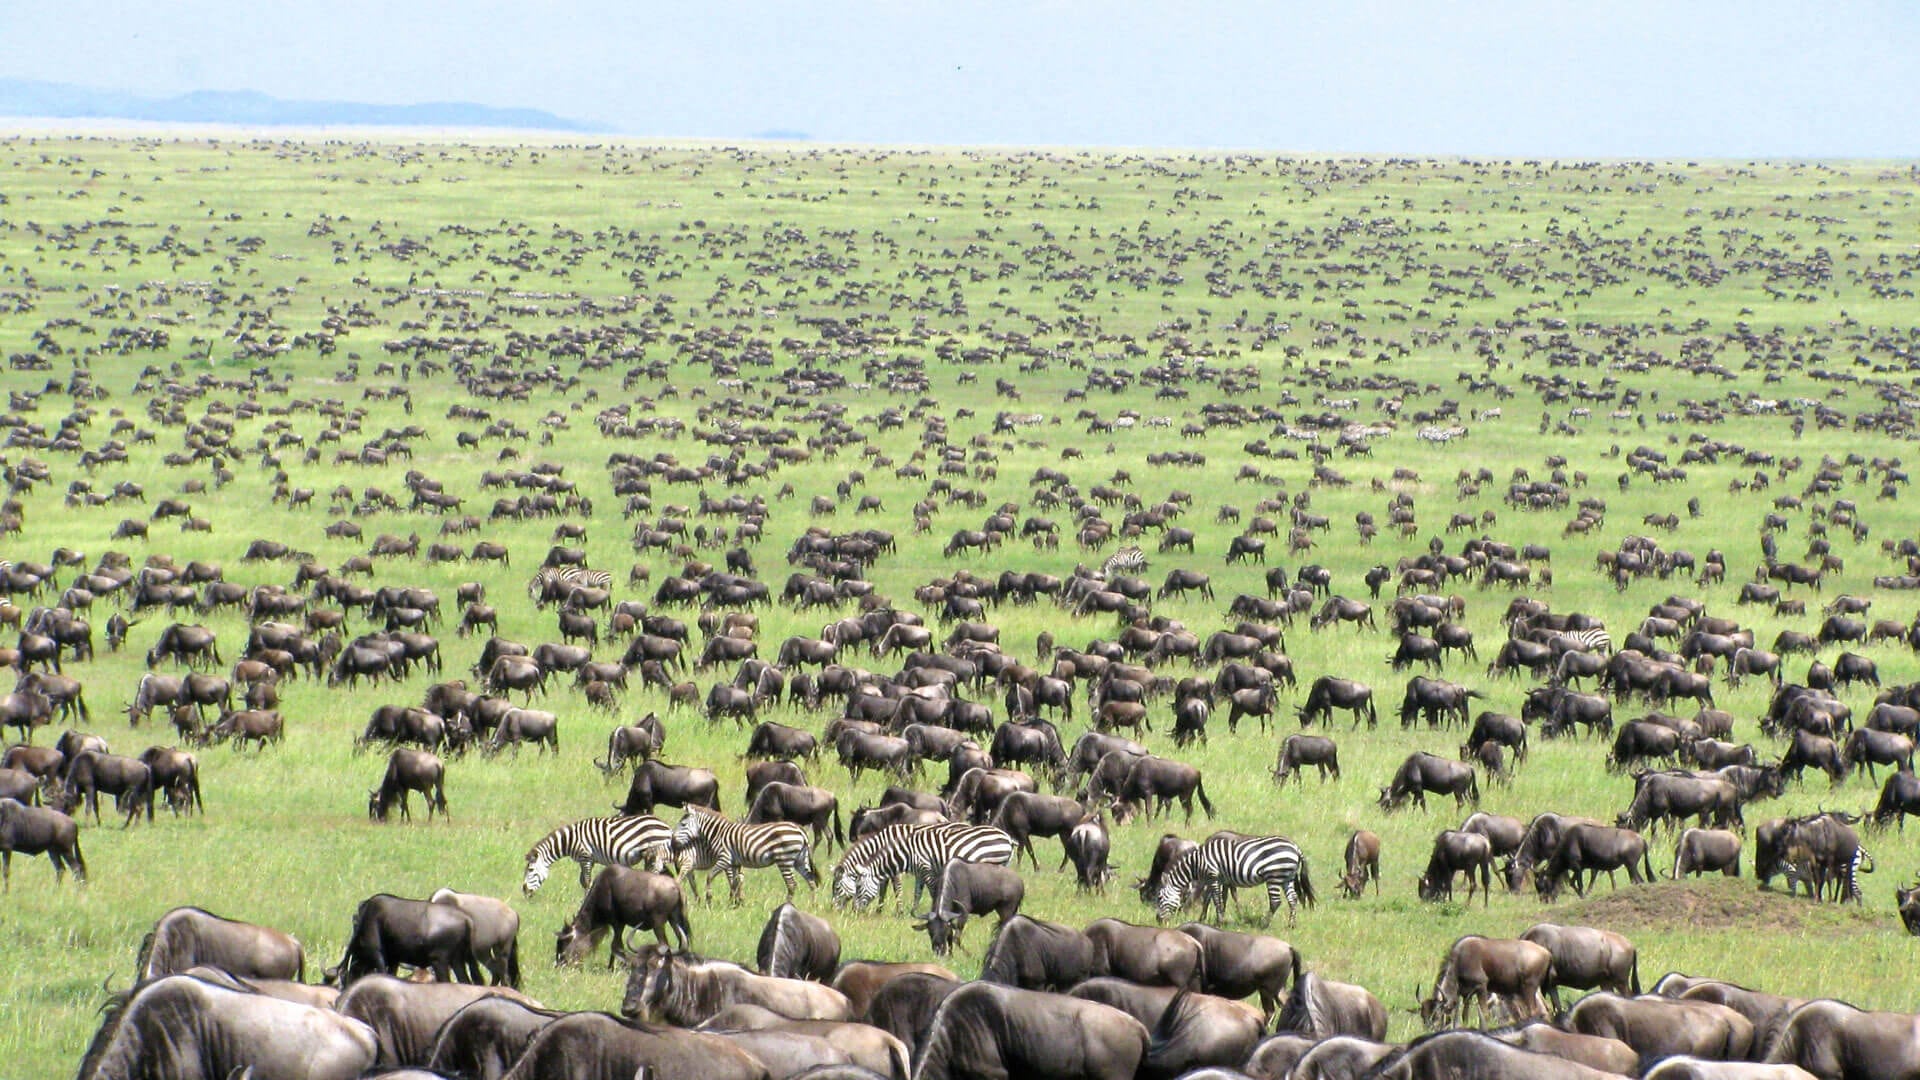 Serengeti Plains during the Great Wildebeest Migration